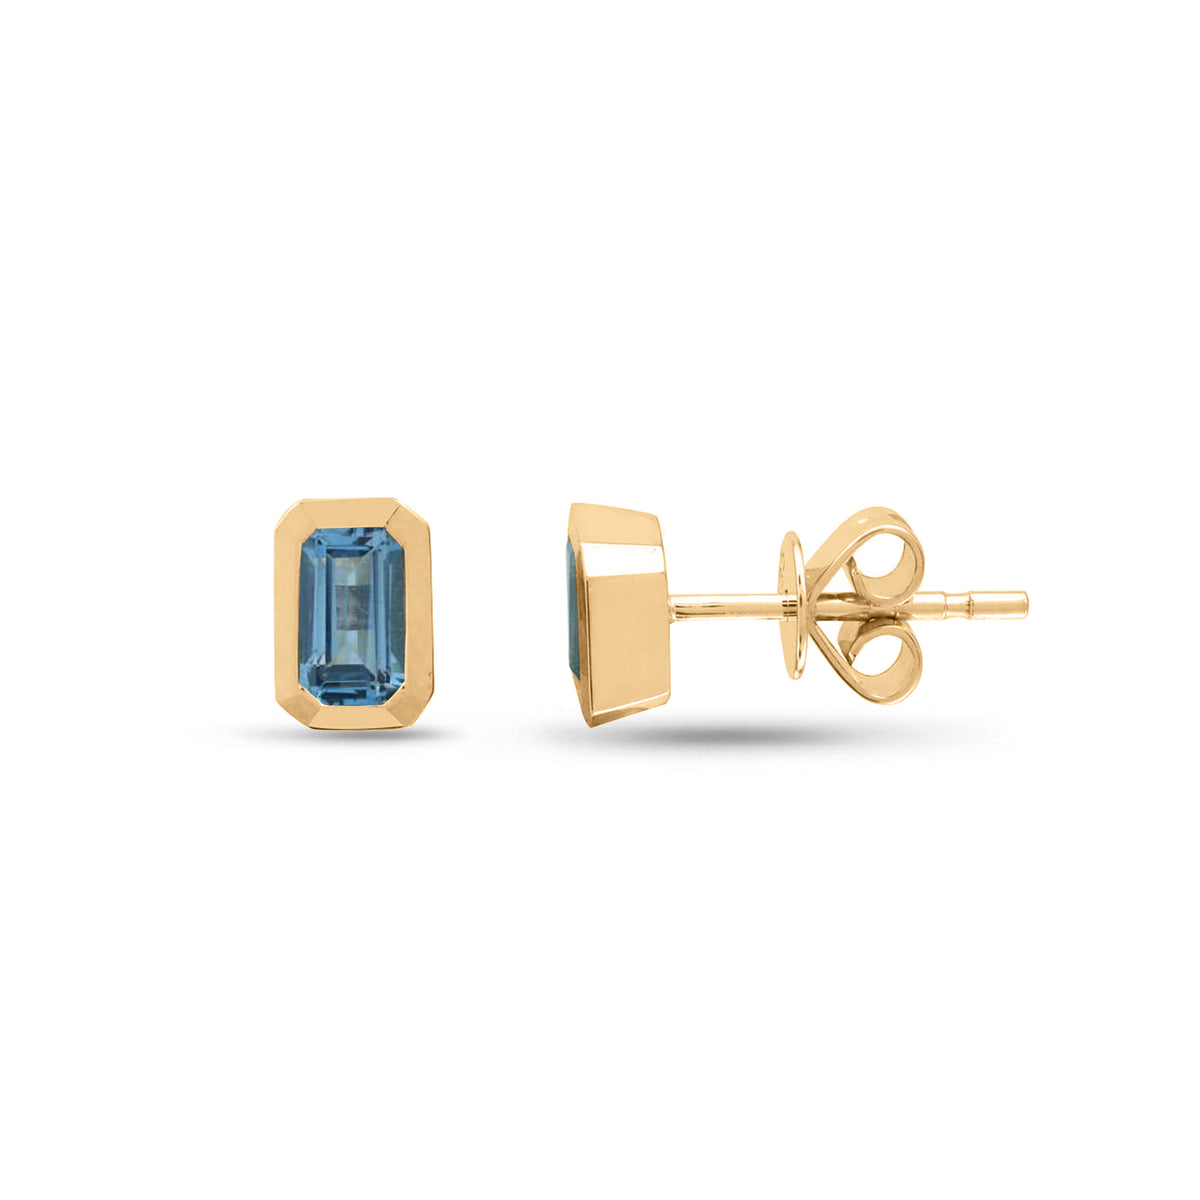 14k yellow gold bezel set gemstone earrings  in blue topaz, amethyst, ruby, emerald, or white topaz